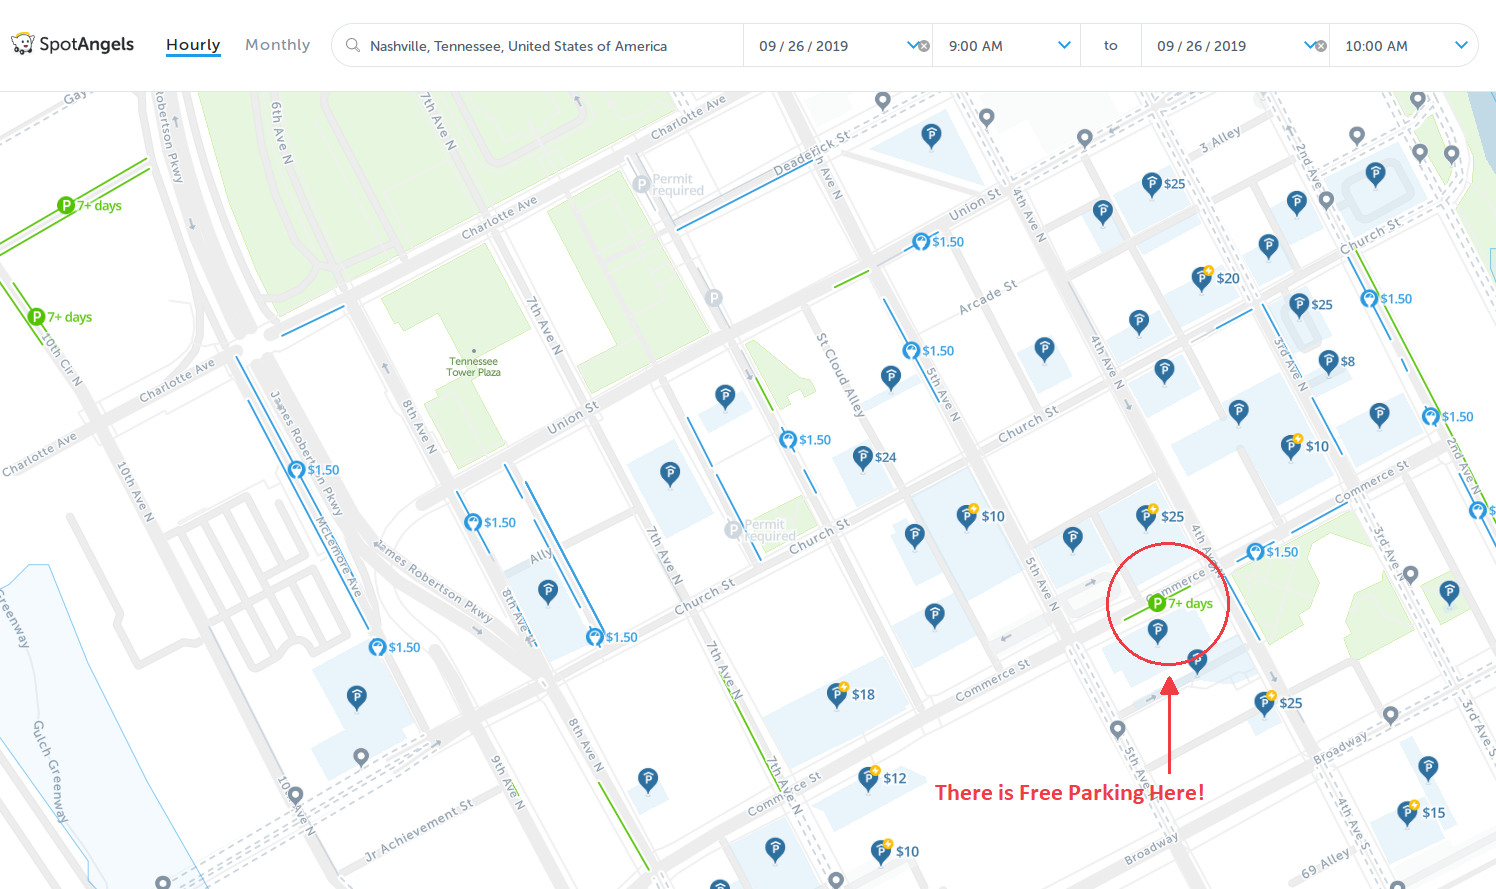 map of free parking in Nashville - SpotAngels